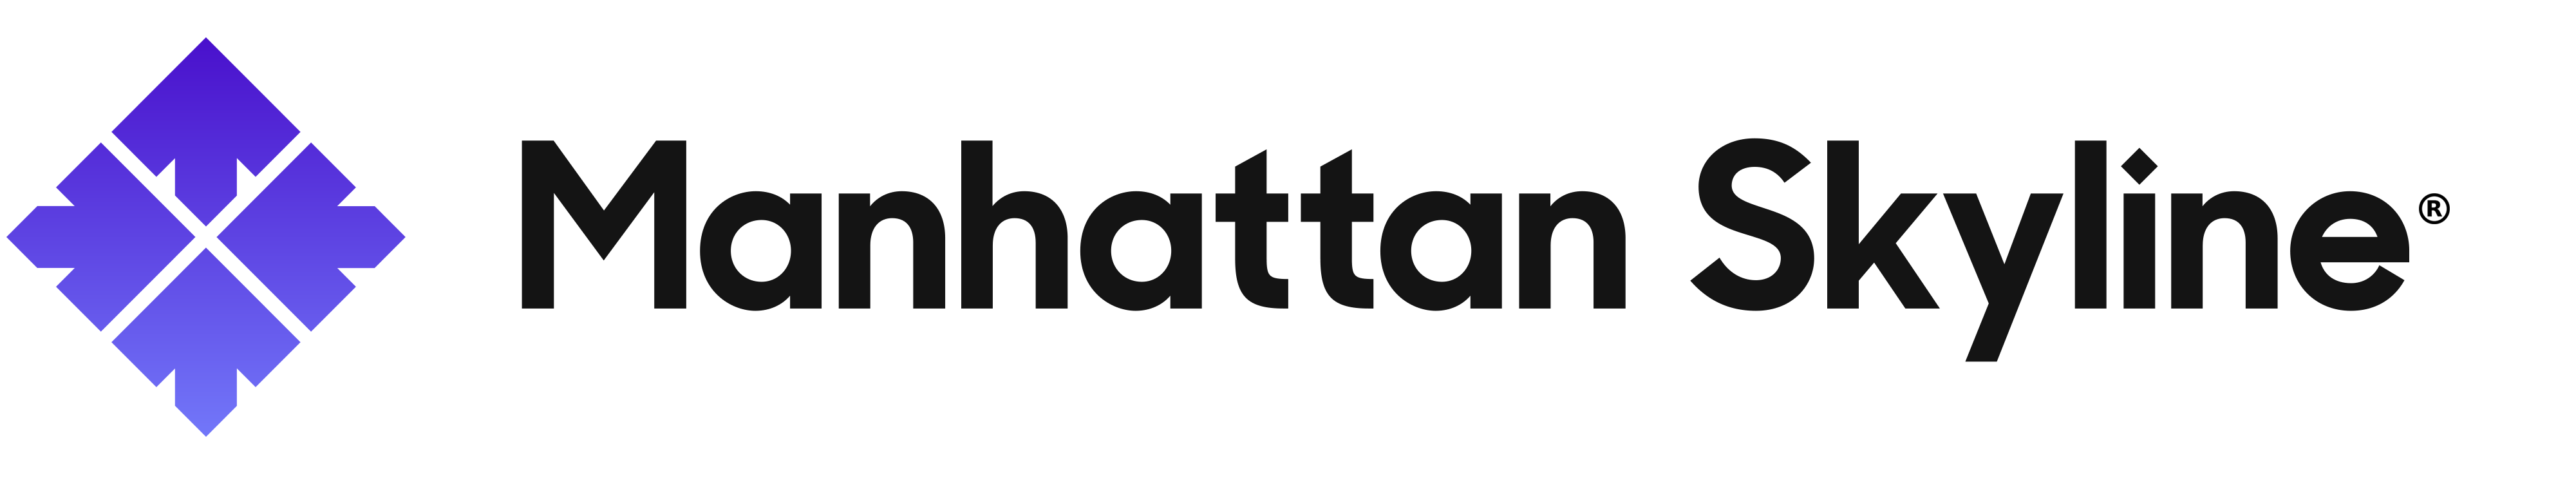 Manhattan Skyline Logo Black